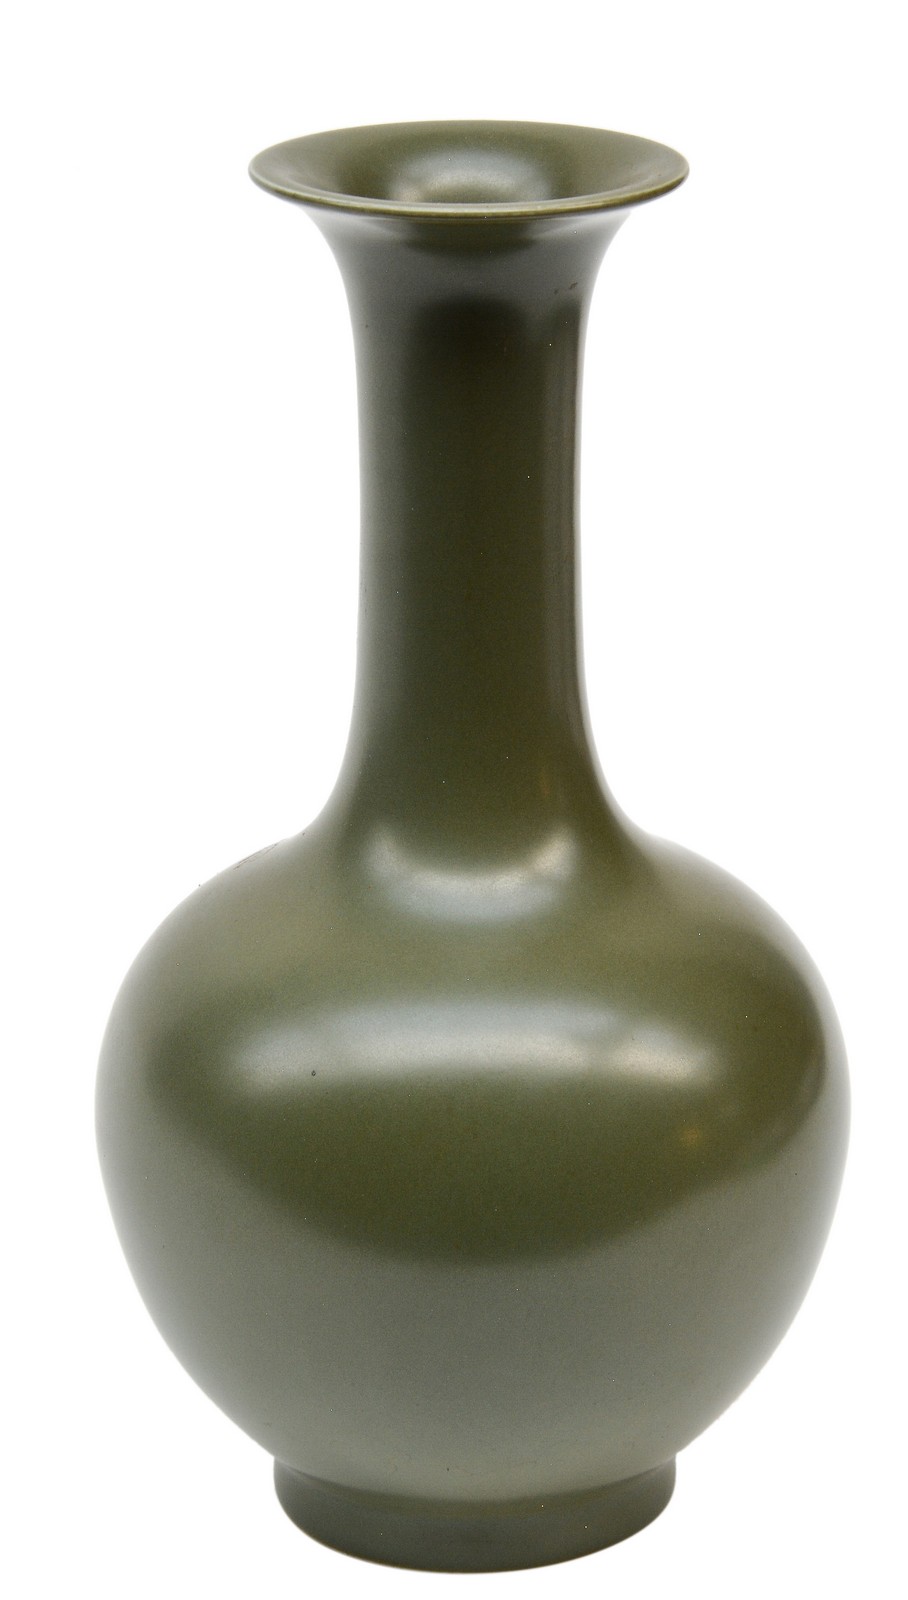 A Chinese monochrome olive green glazed bottle vase, with a blue underglaze mark, H 25 cm